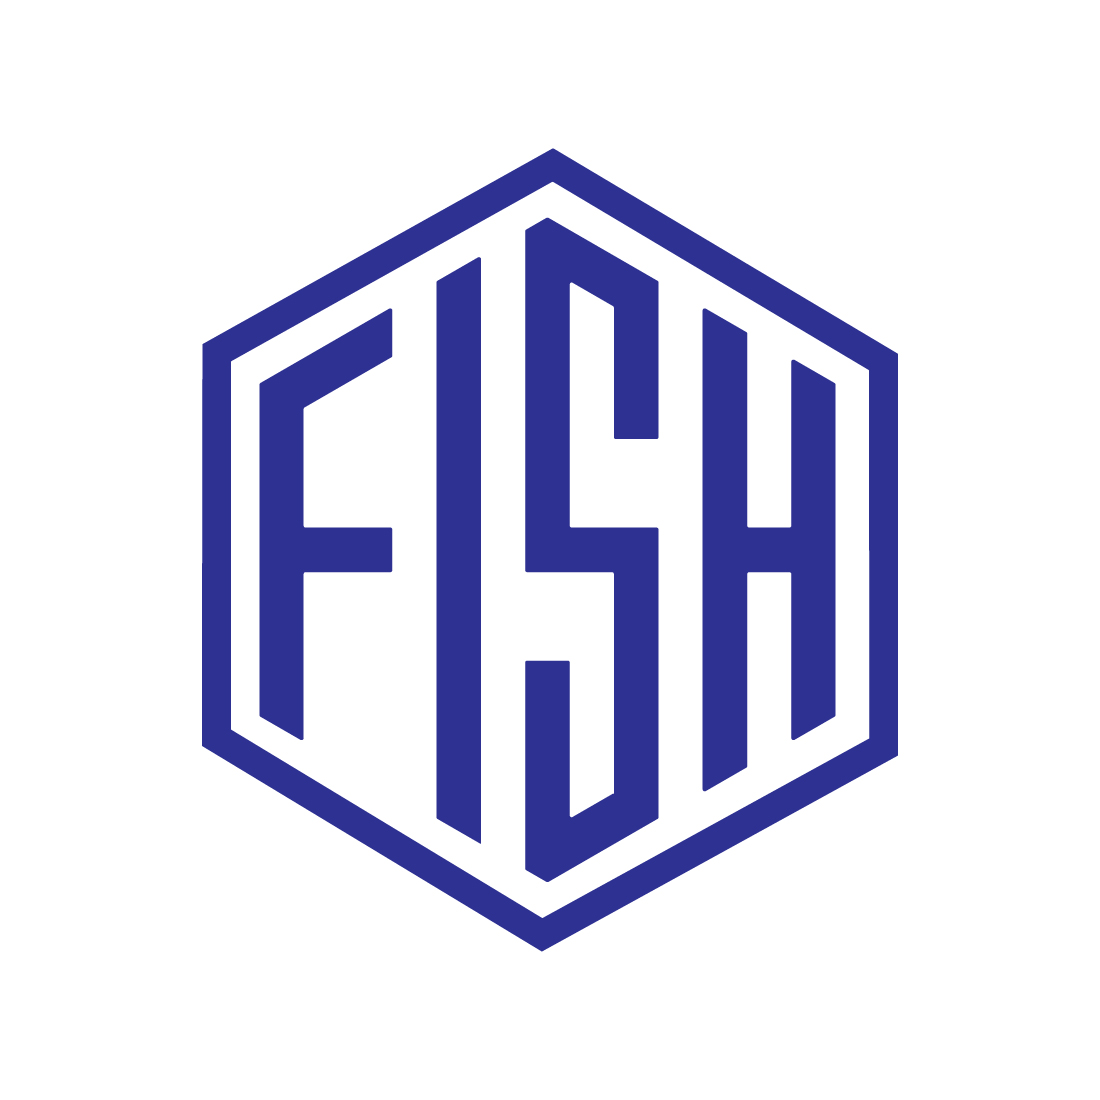 Fish logo design vector images FISH logo monogram icon design Polygon fish logo best icon preview image.